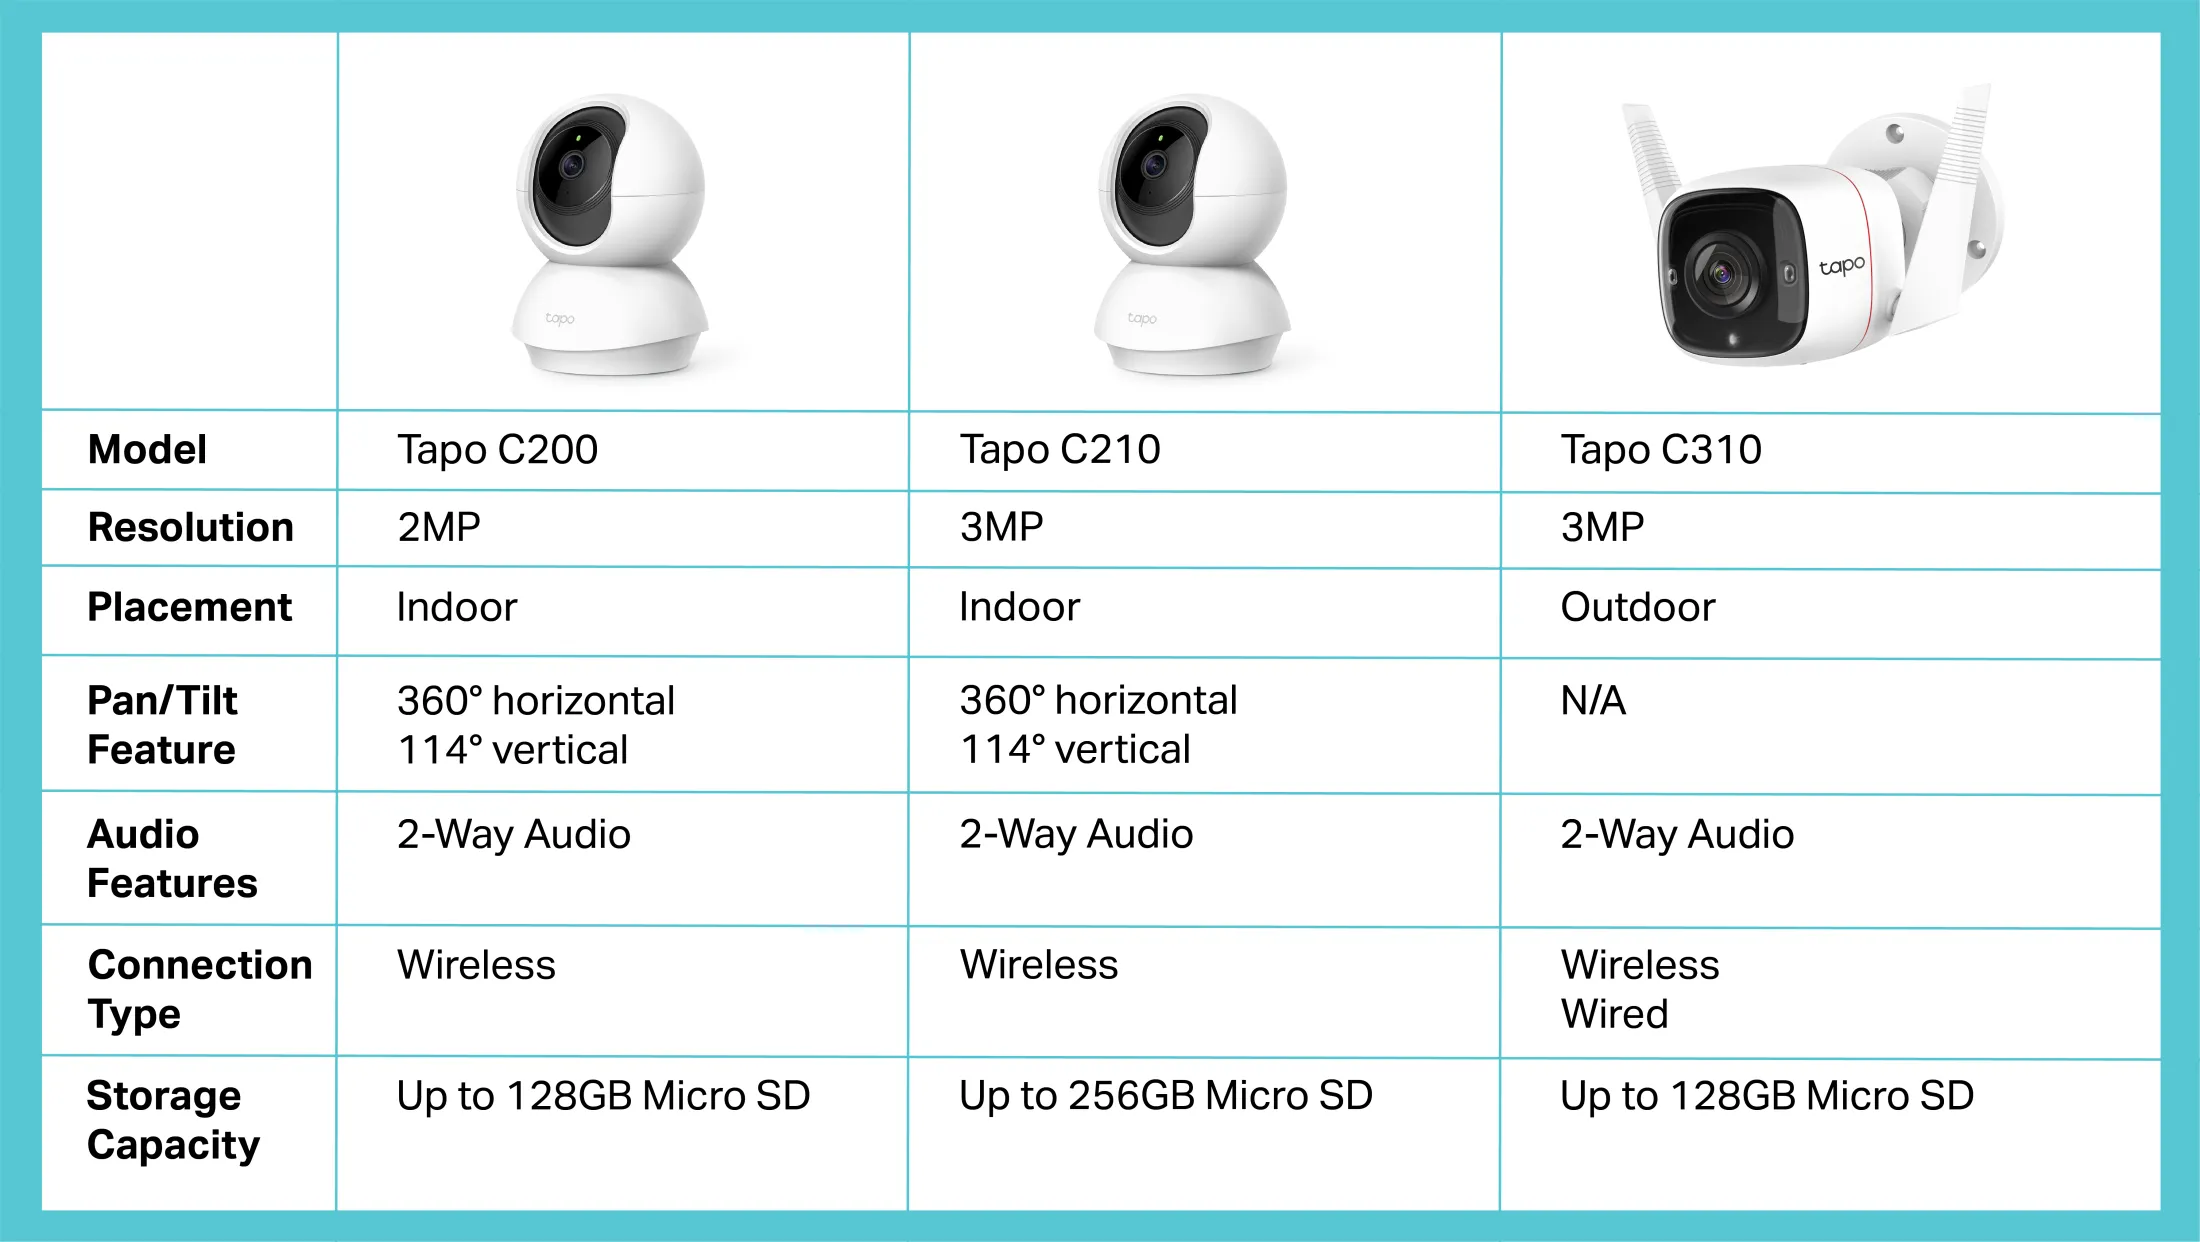 TP-Link Tapo C210 Pan/Tilt Home Security Wi-Fi Camera – WarehouseDad